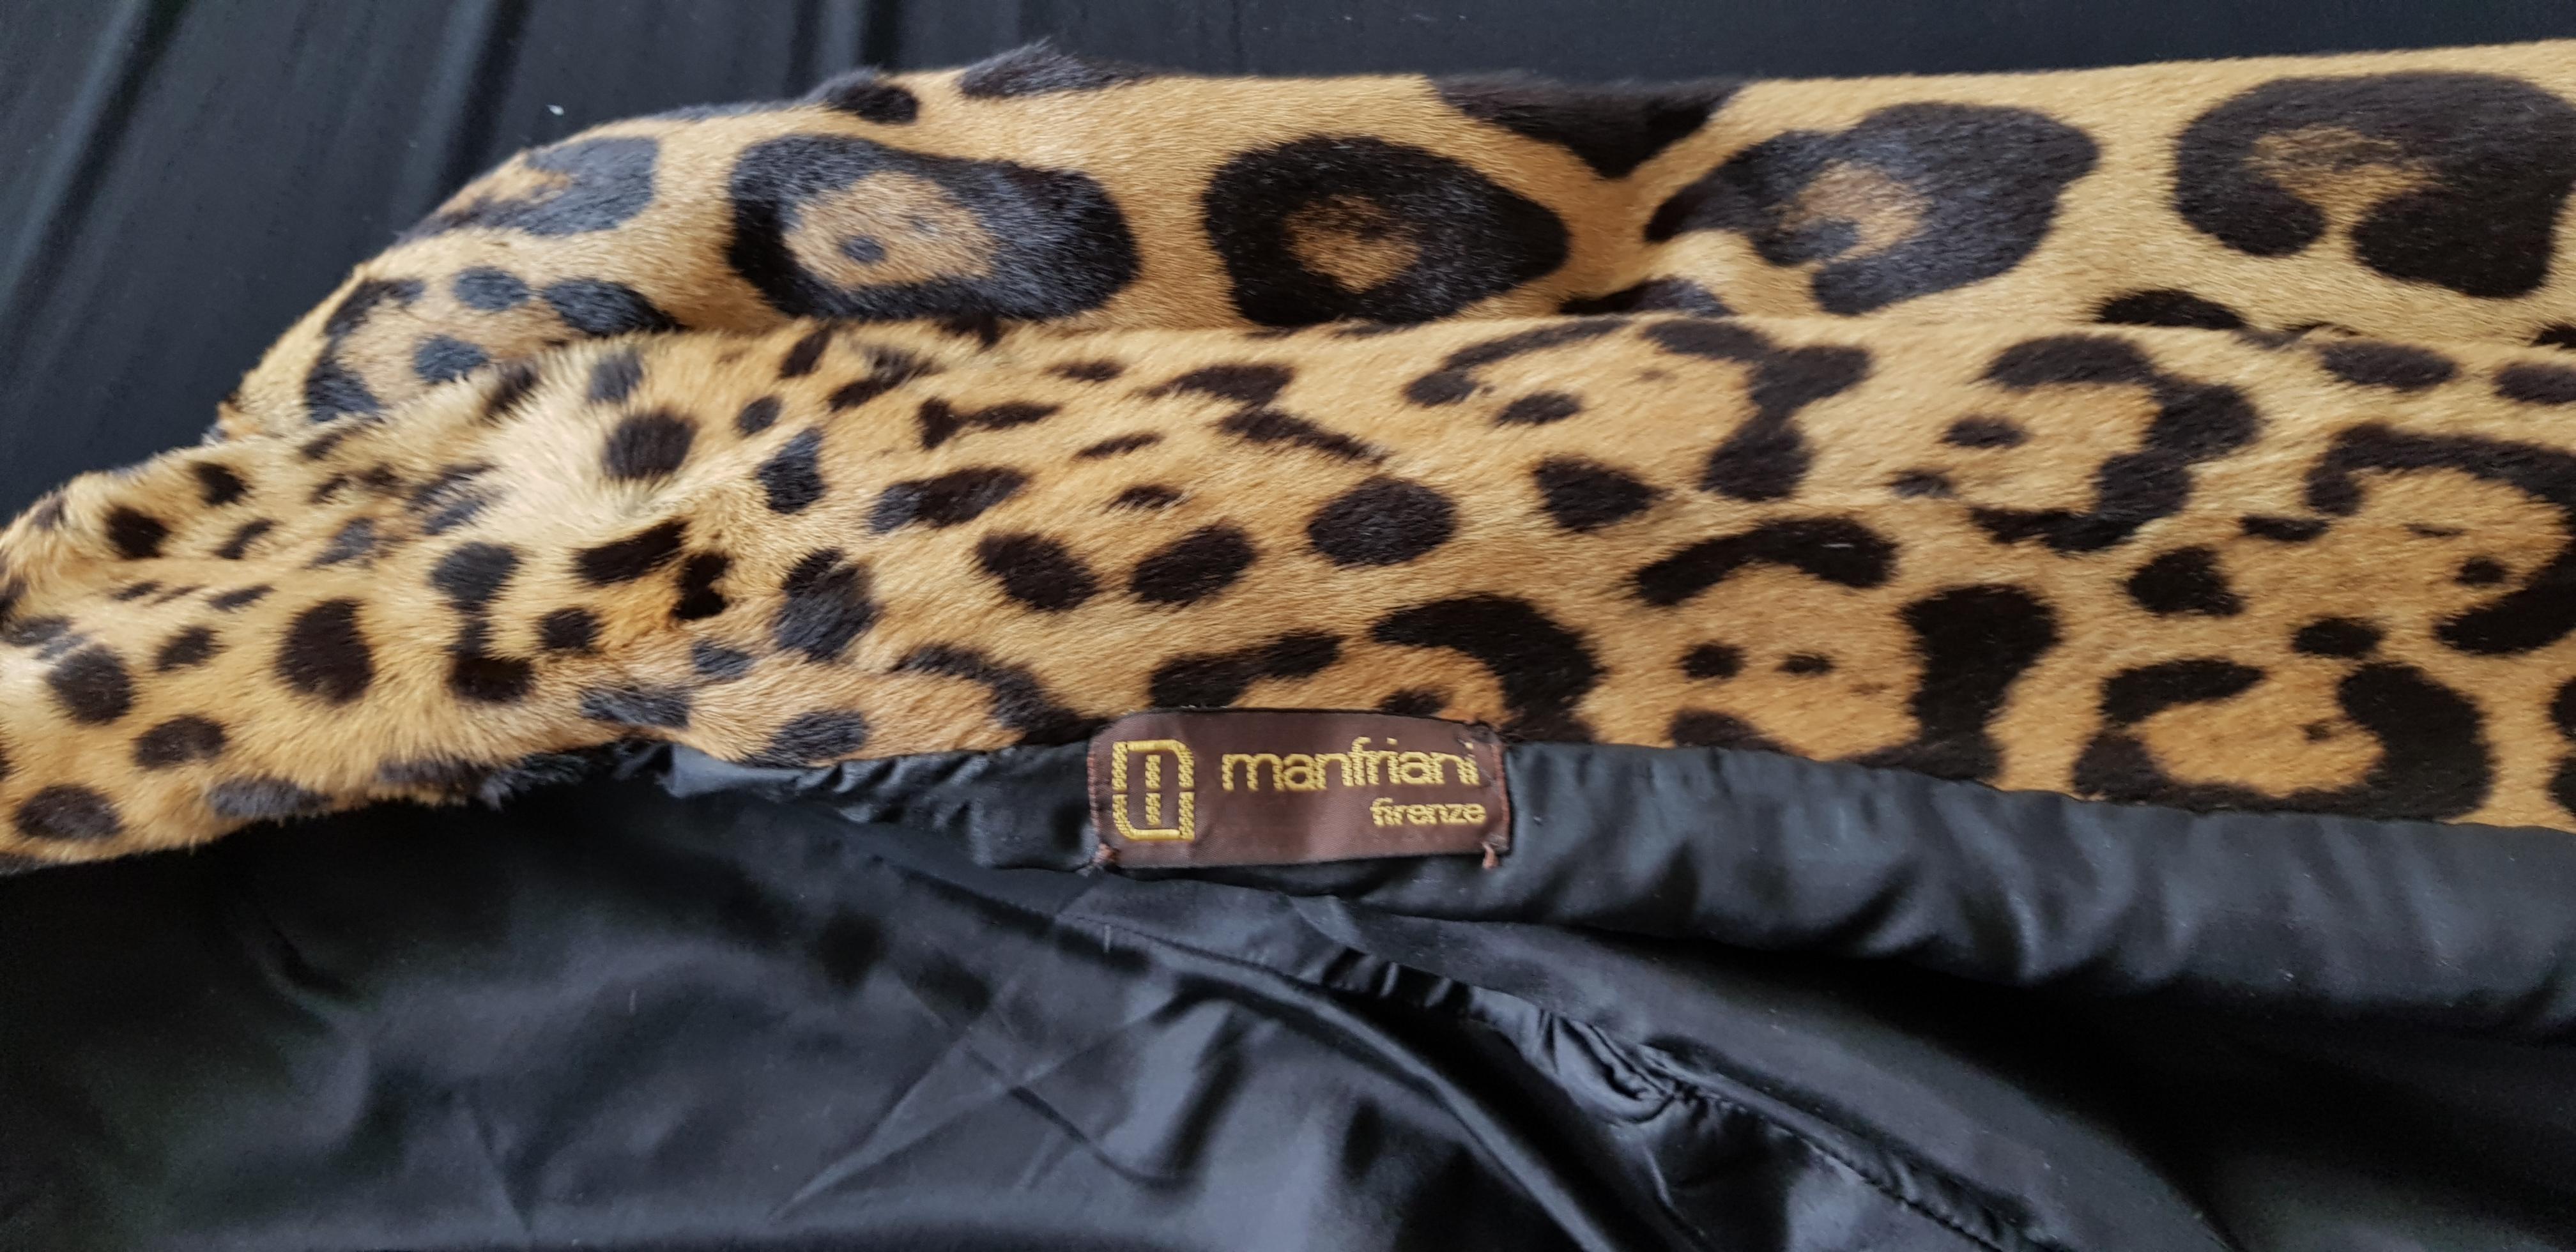 Haute Couture MANFRIANI Florence Rare Wild Jaguar Fur (Pre-Ban) Coat. Unworn  For Sale 6